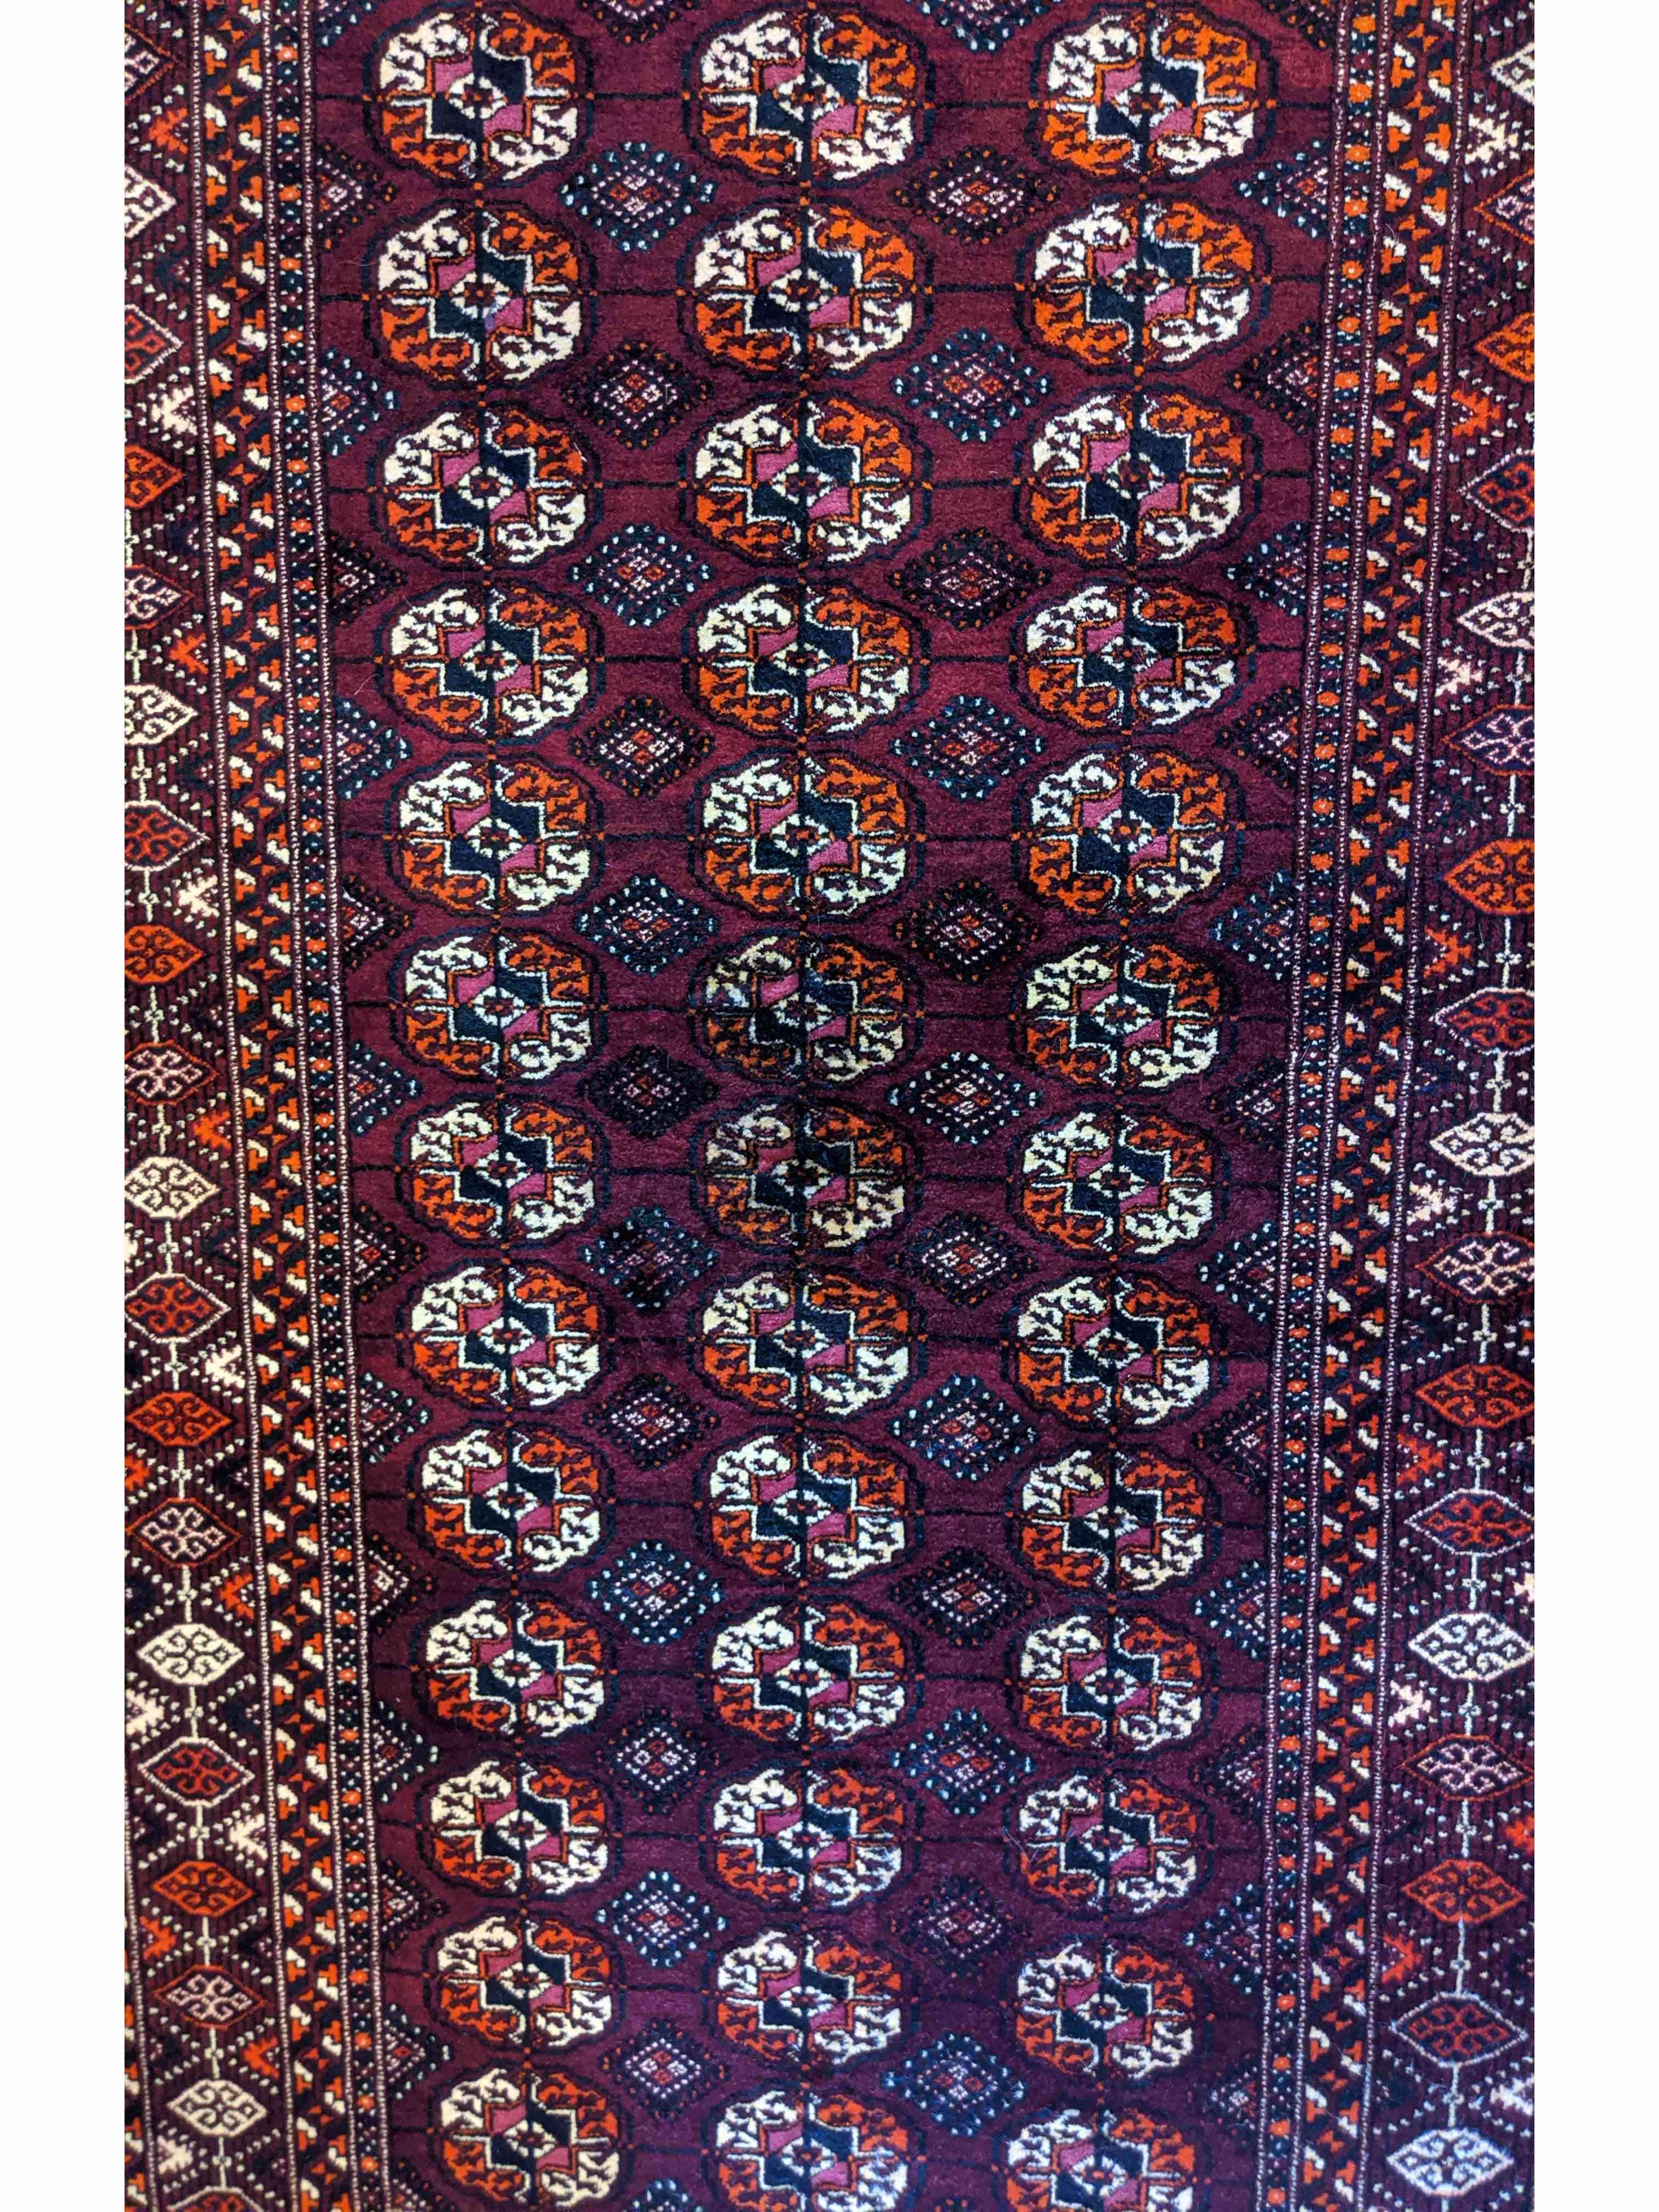 225 x 113 cm Pakistan Bukhara Purple Rug - Rugmaster